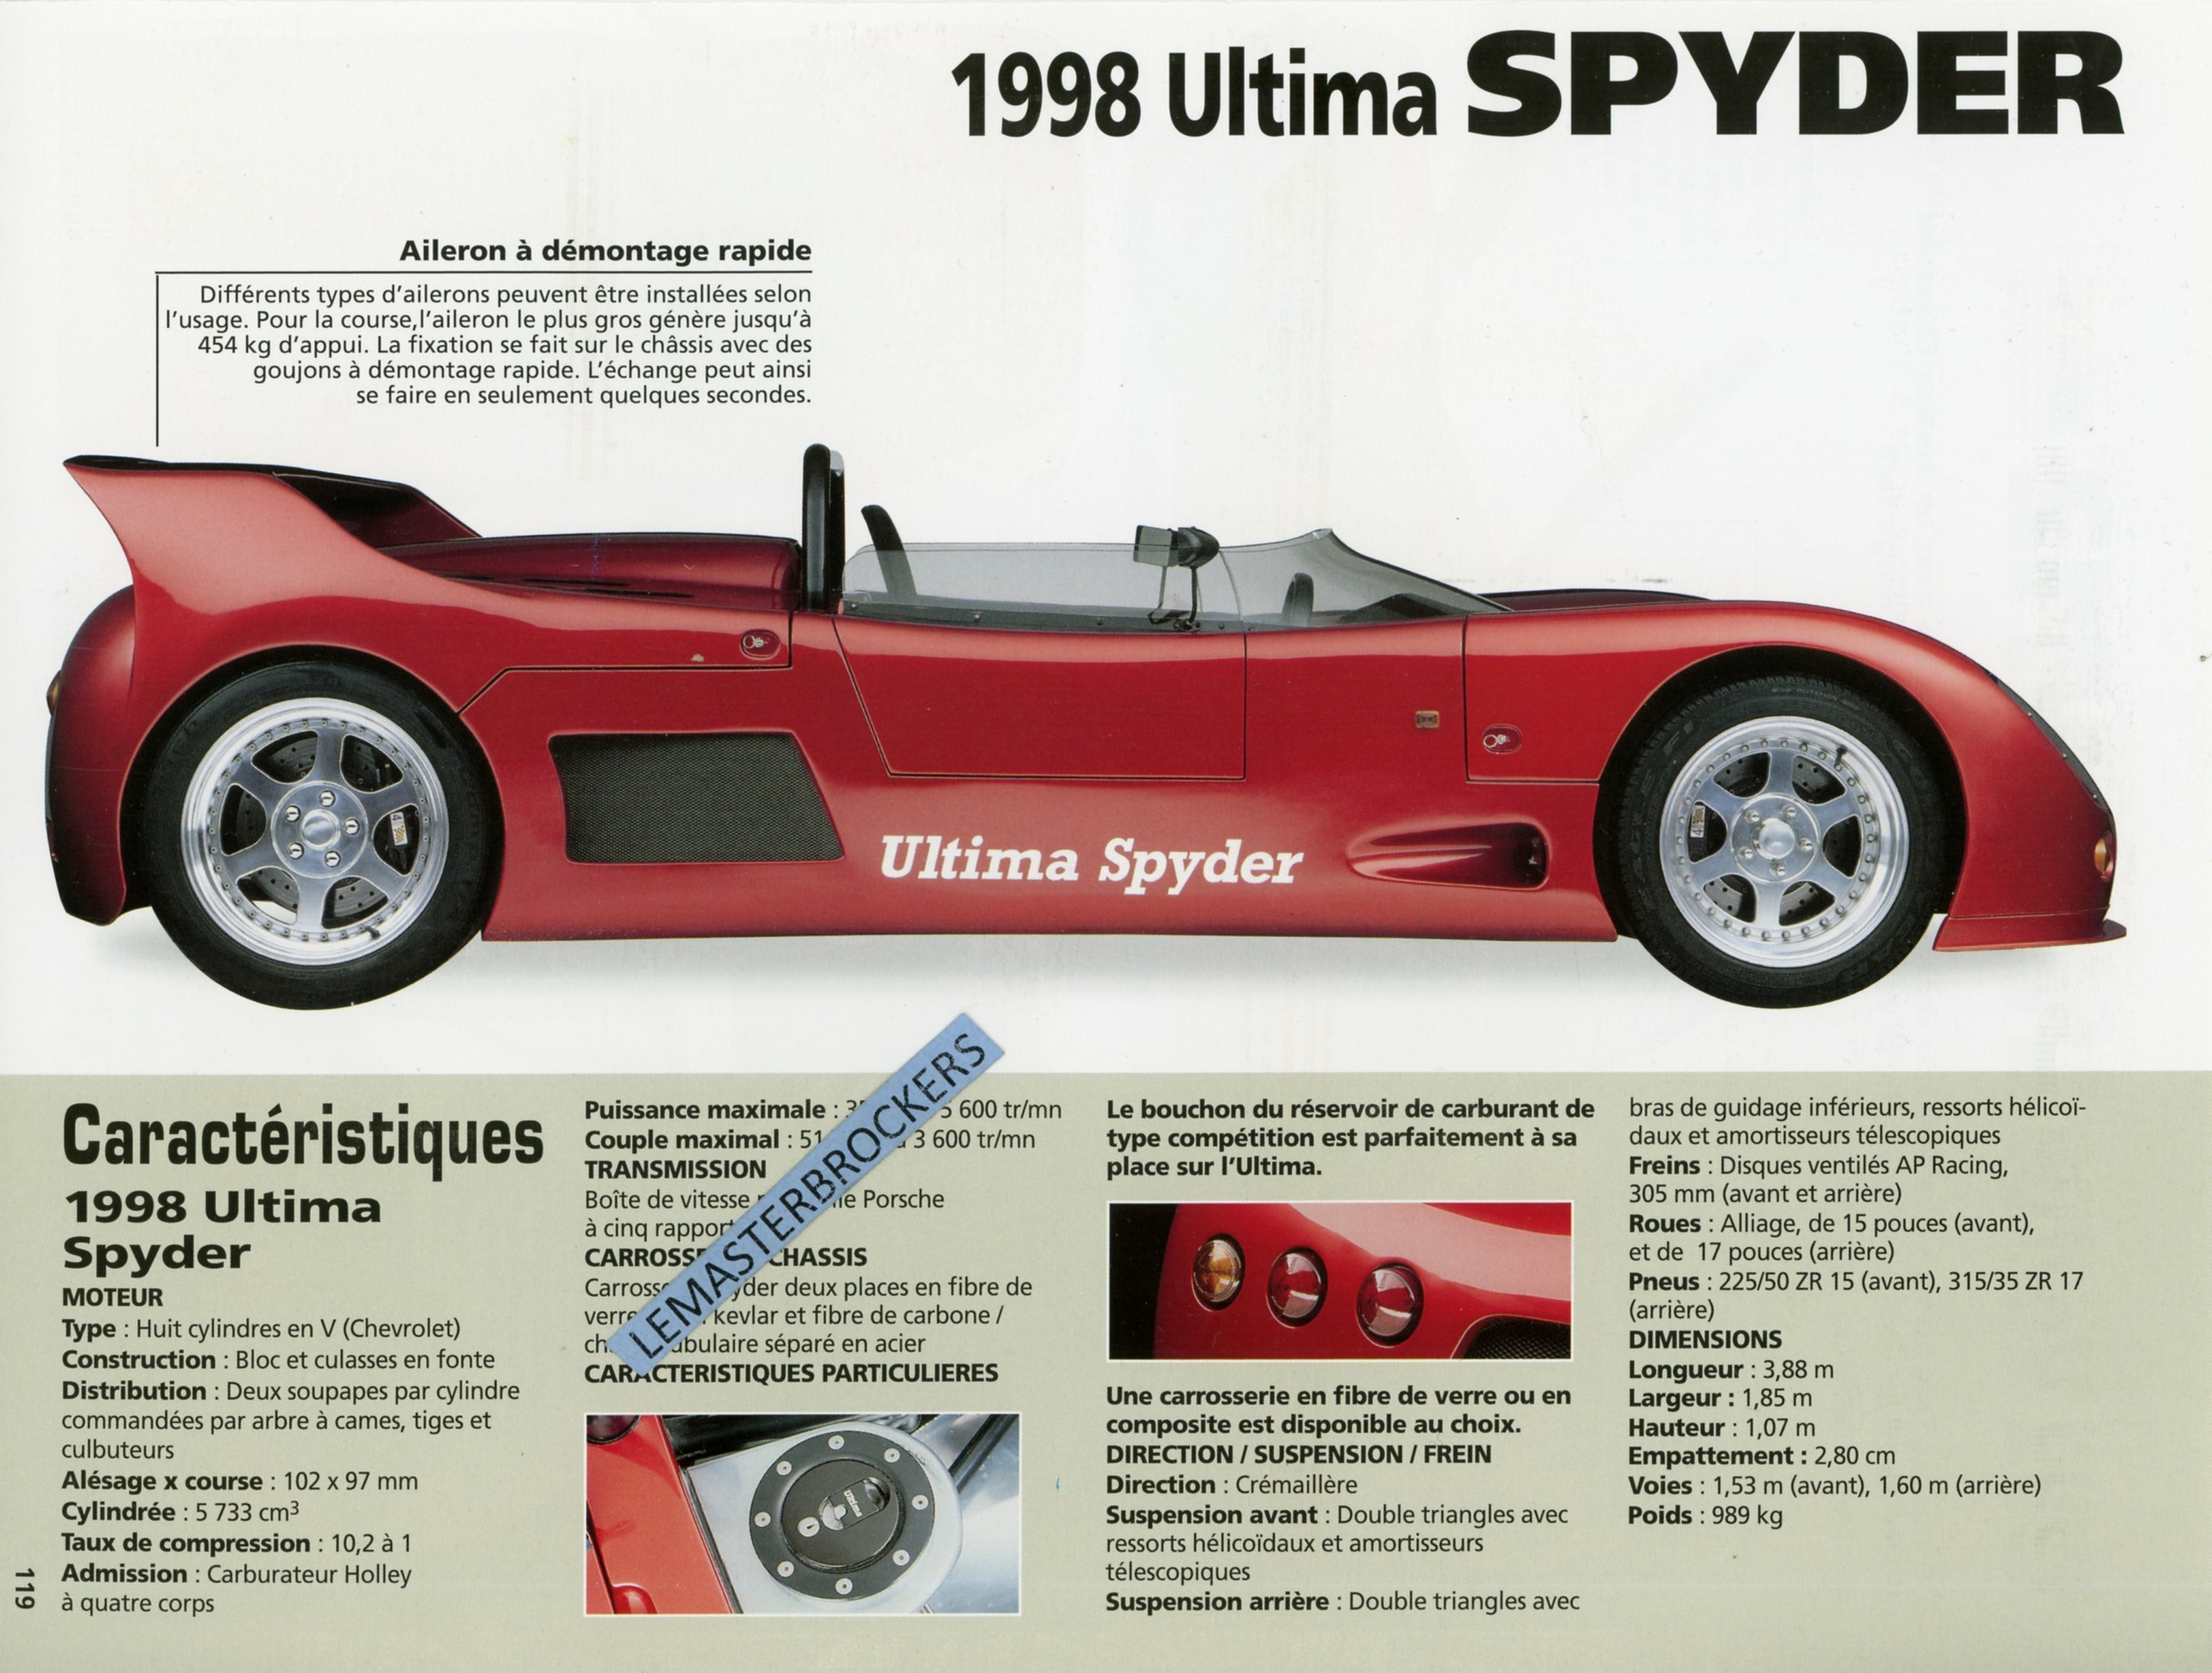 FICHE AUTO ULTIMA SPYDER 1998 LEMASTERBROCKERS